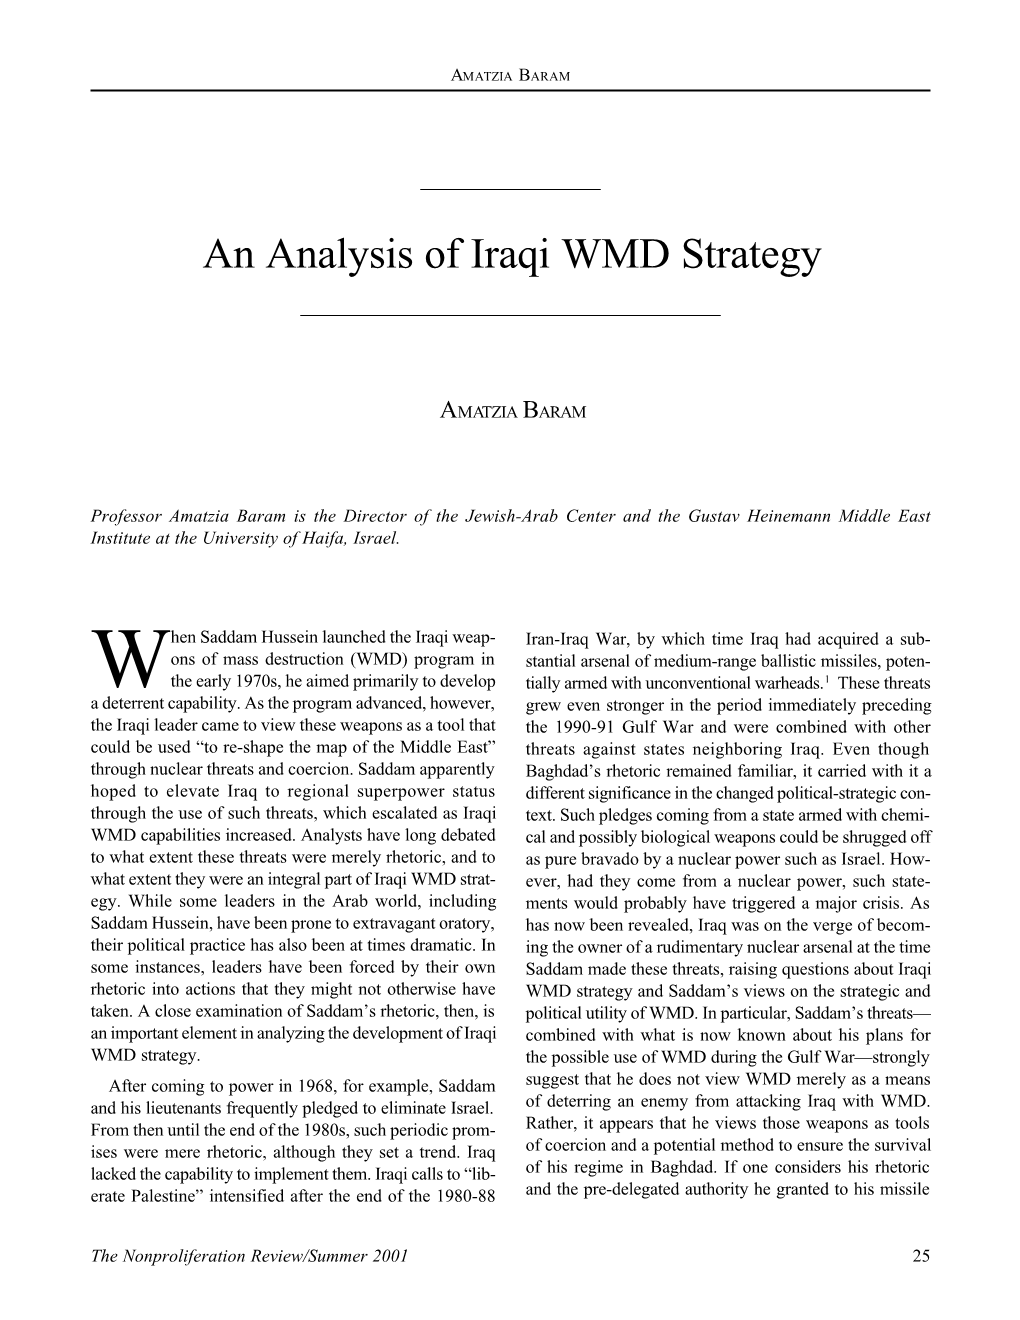 An Analysis of Iraqi WMD Strategy